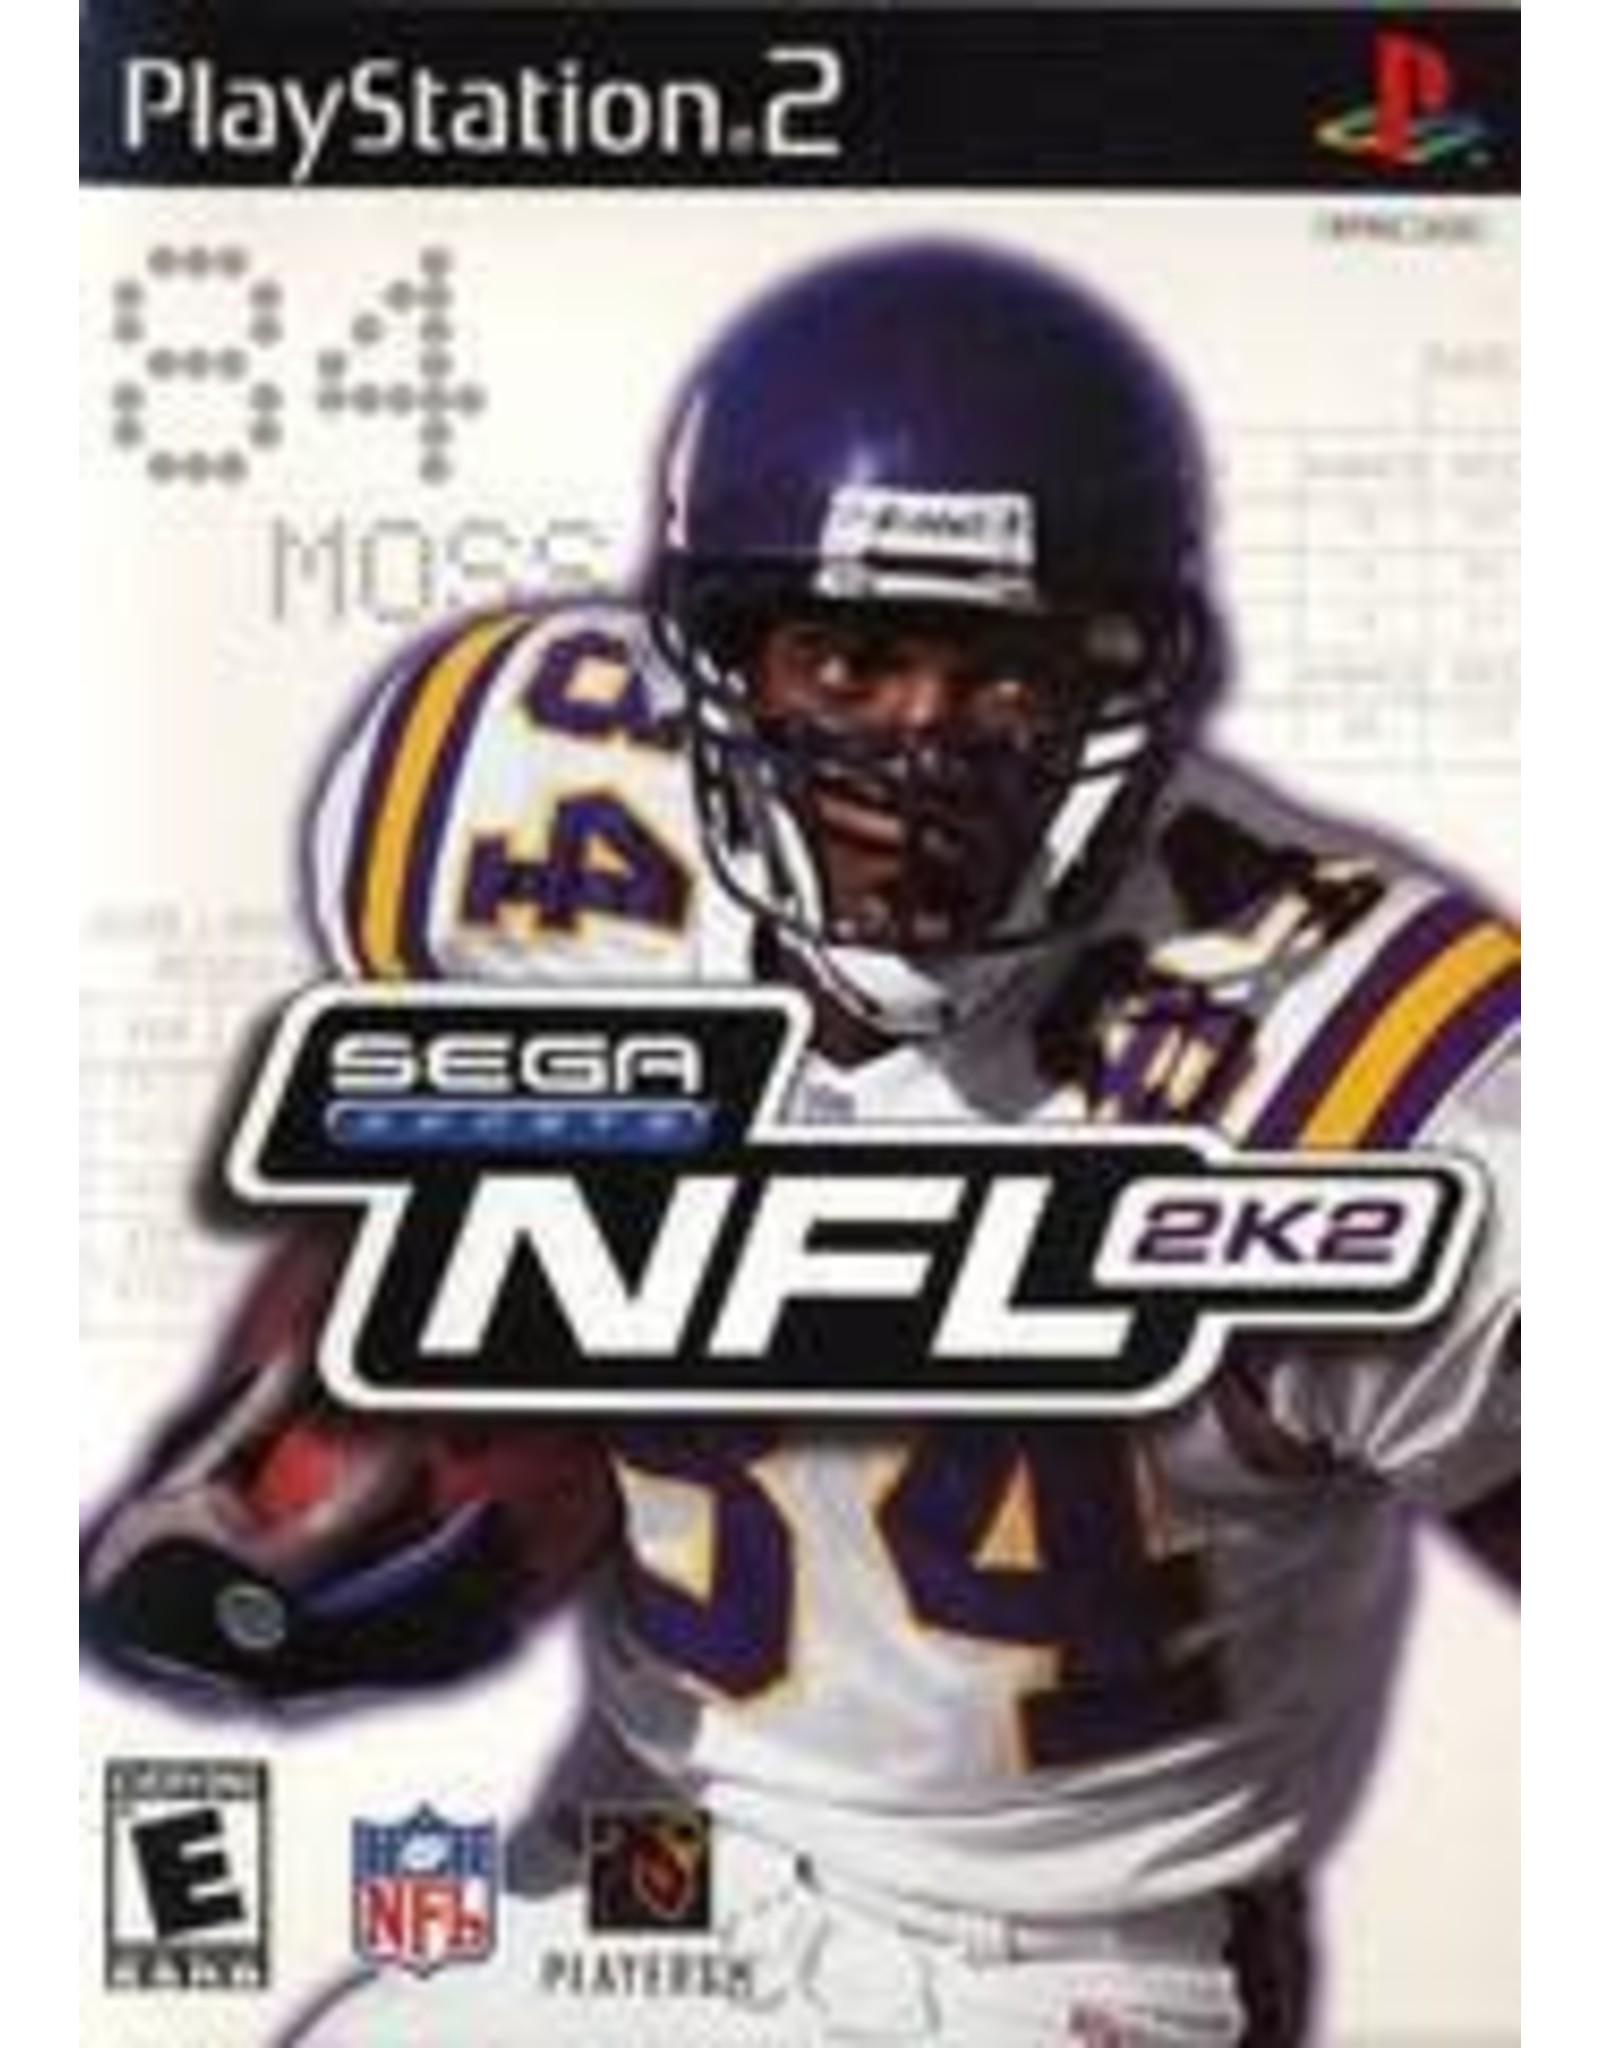 Playstation 2 NFL 2K2 (CiB)